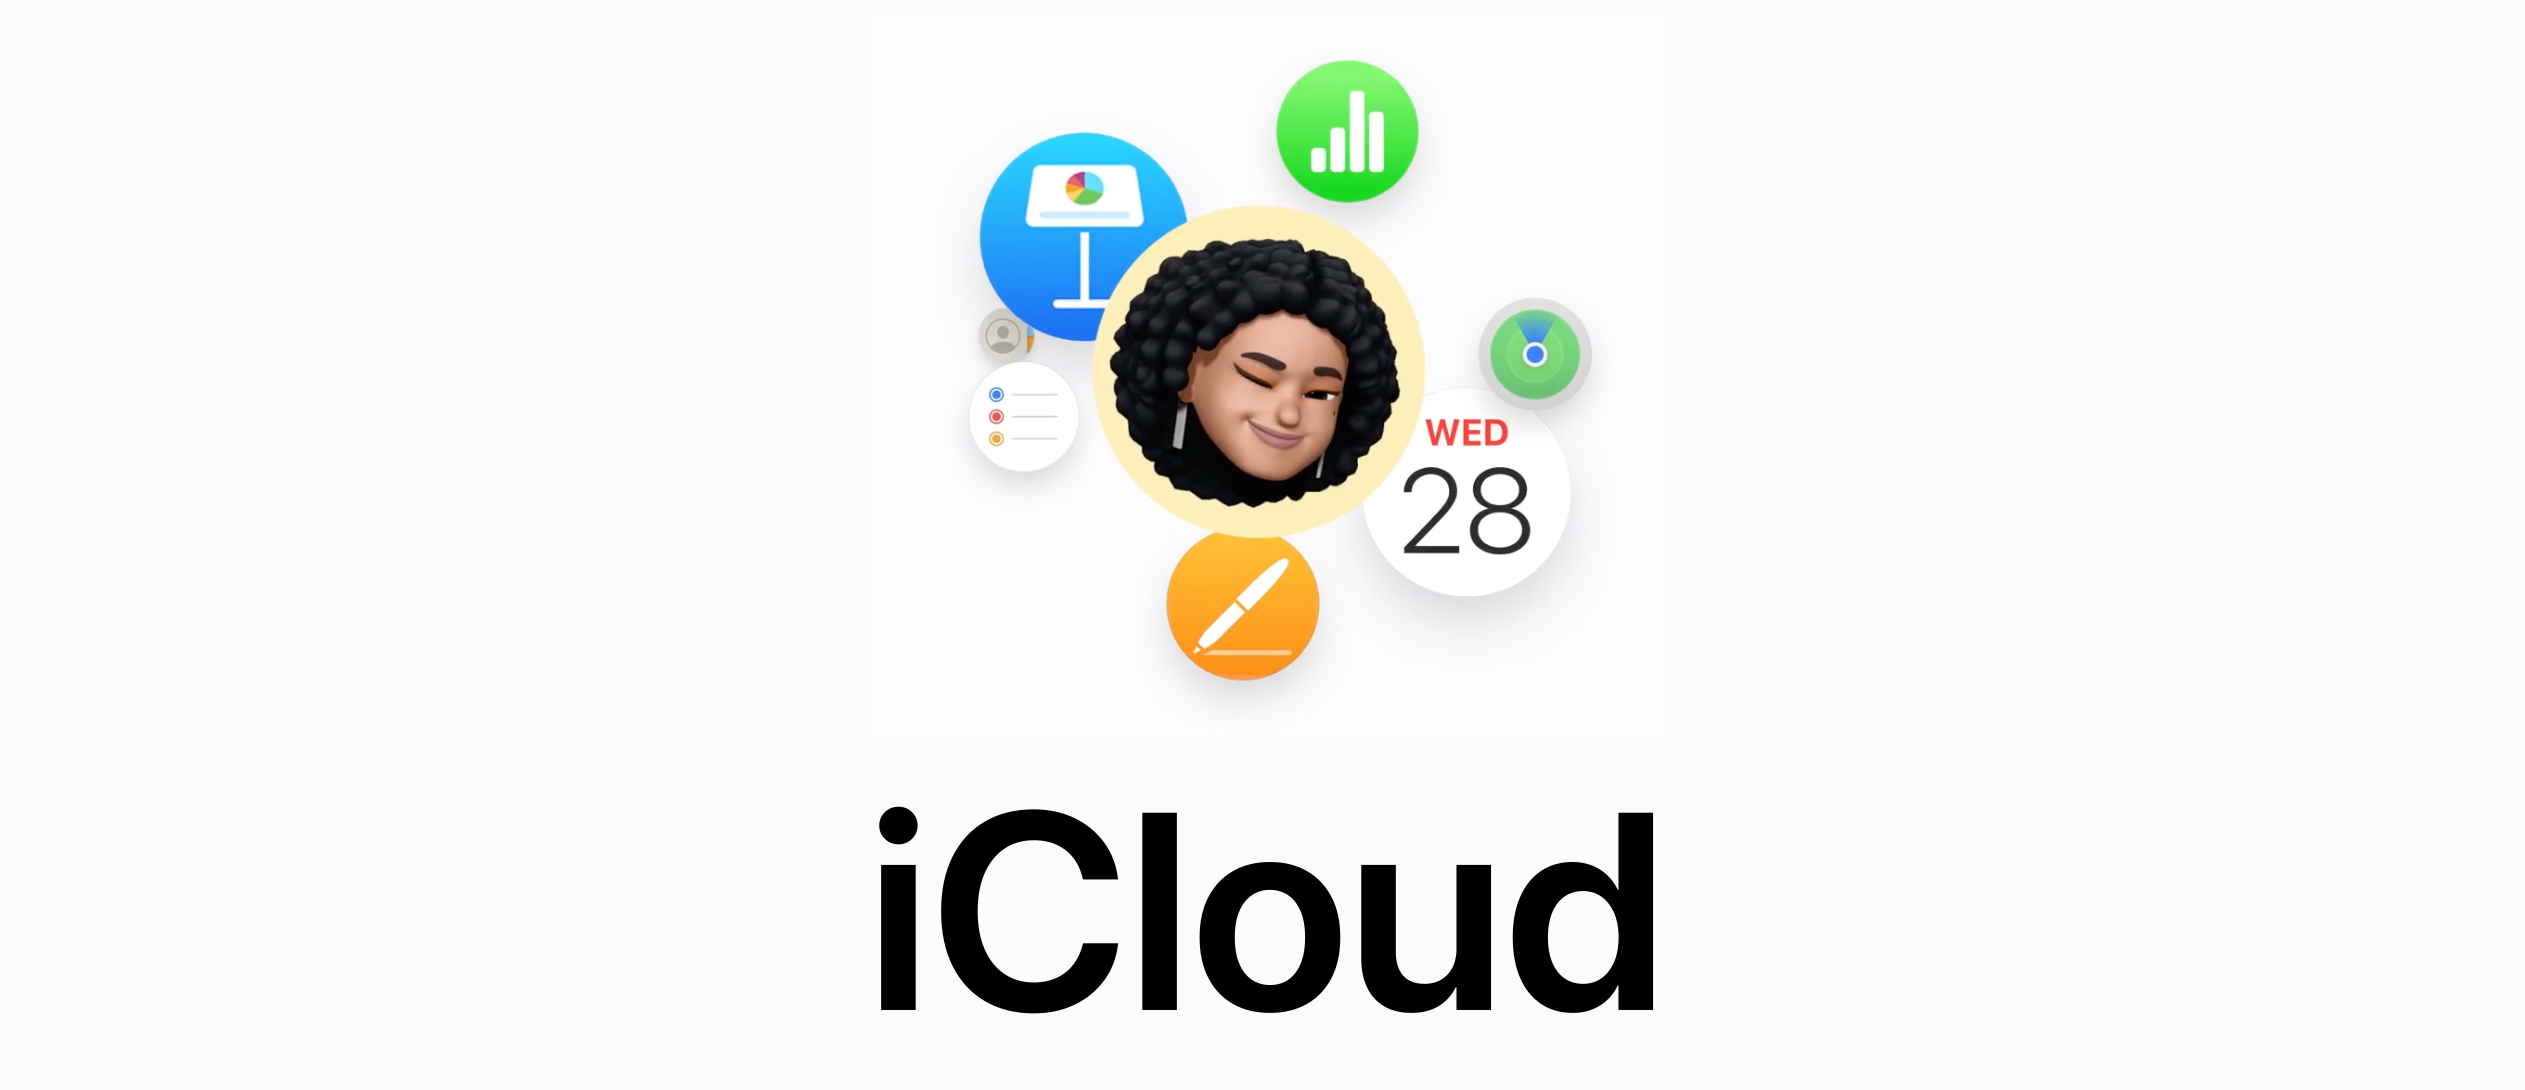 icloud logo png